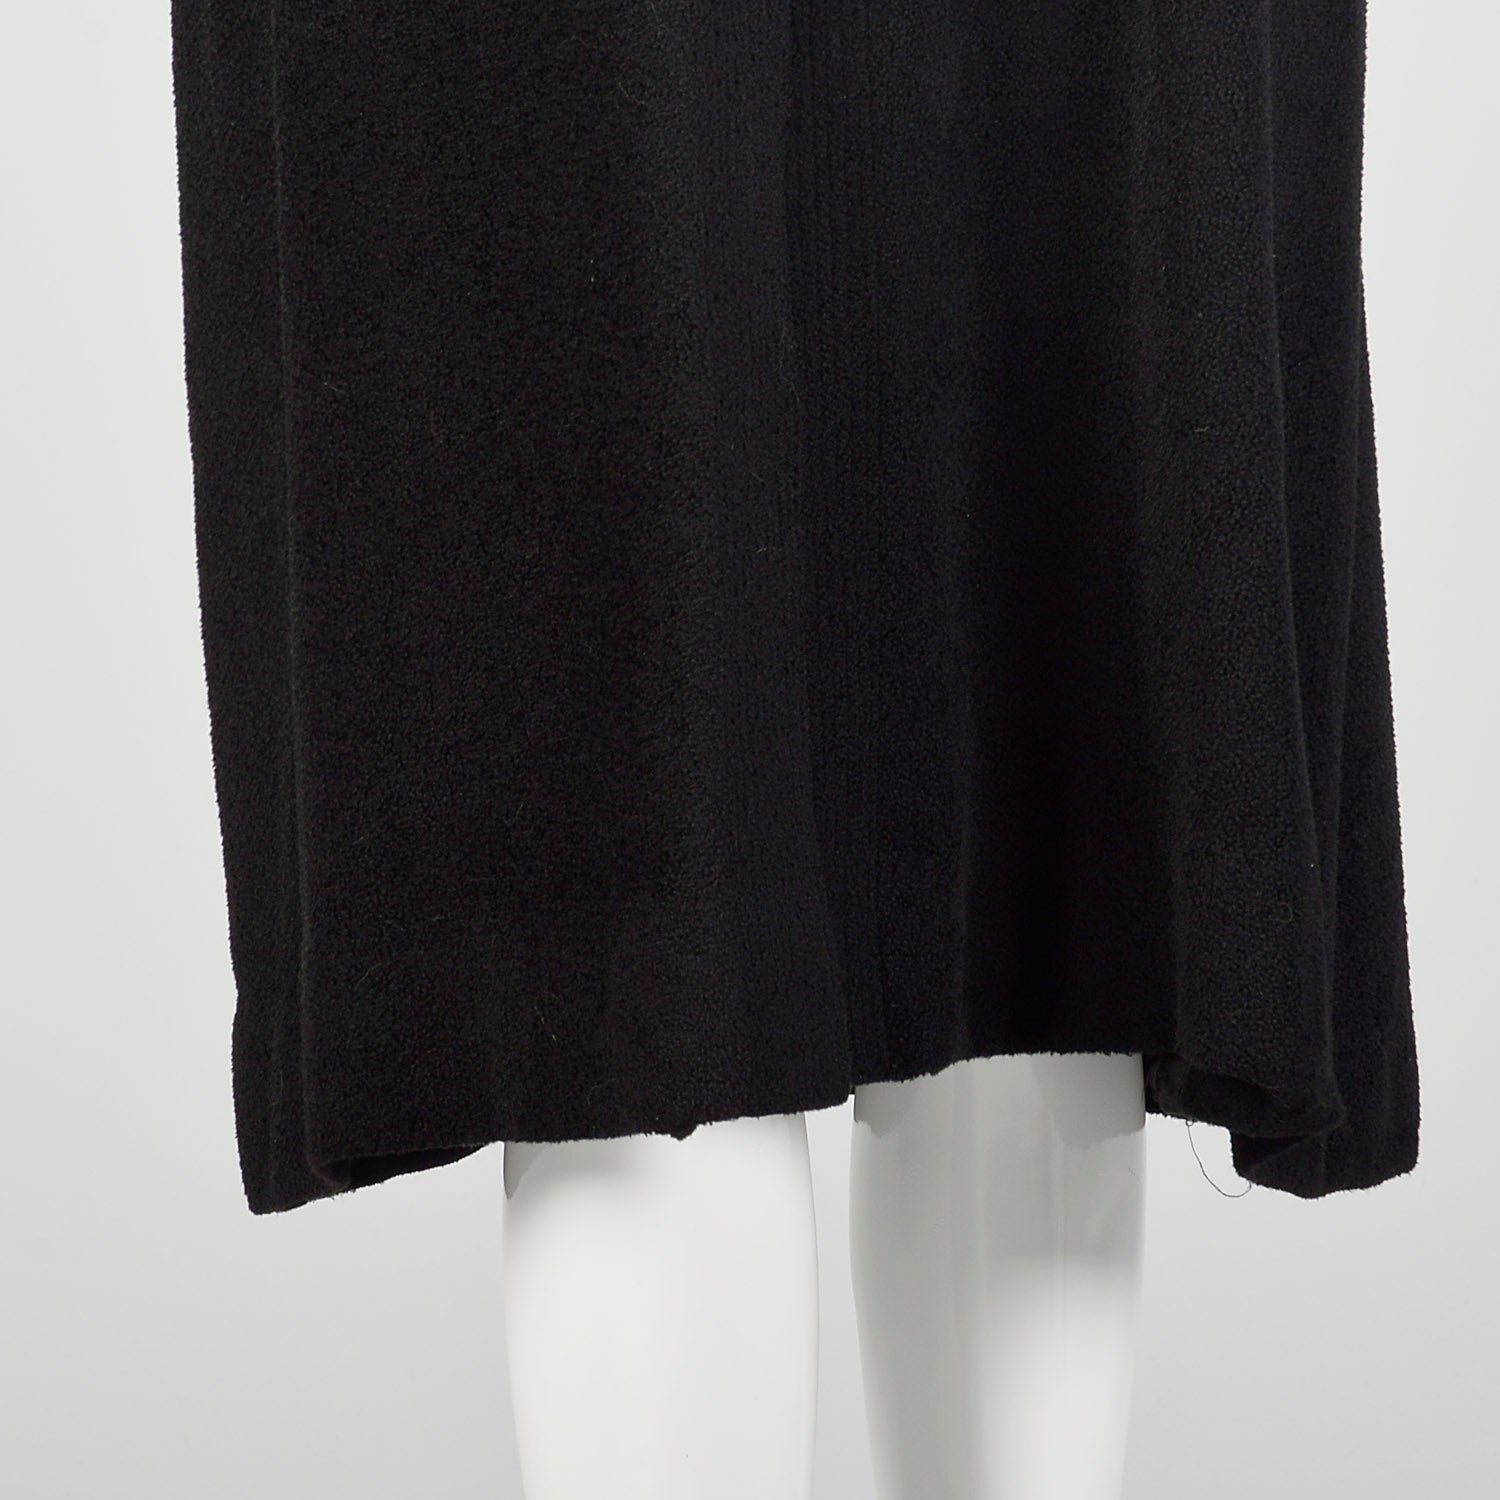 Medium 1930s Swing Coat Long Sleeve Soft Black Patch Pockets Winter